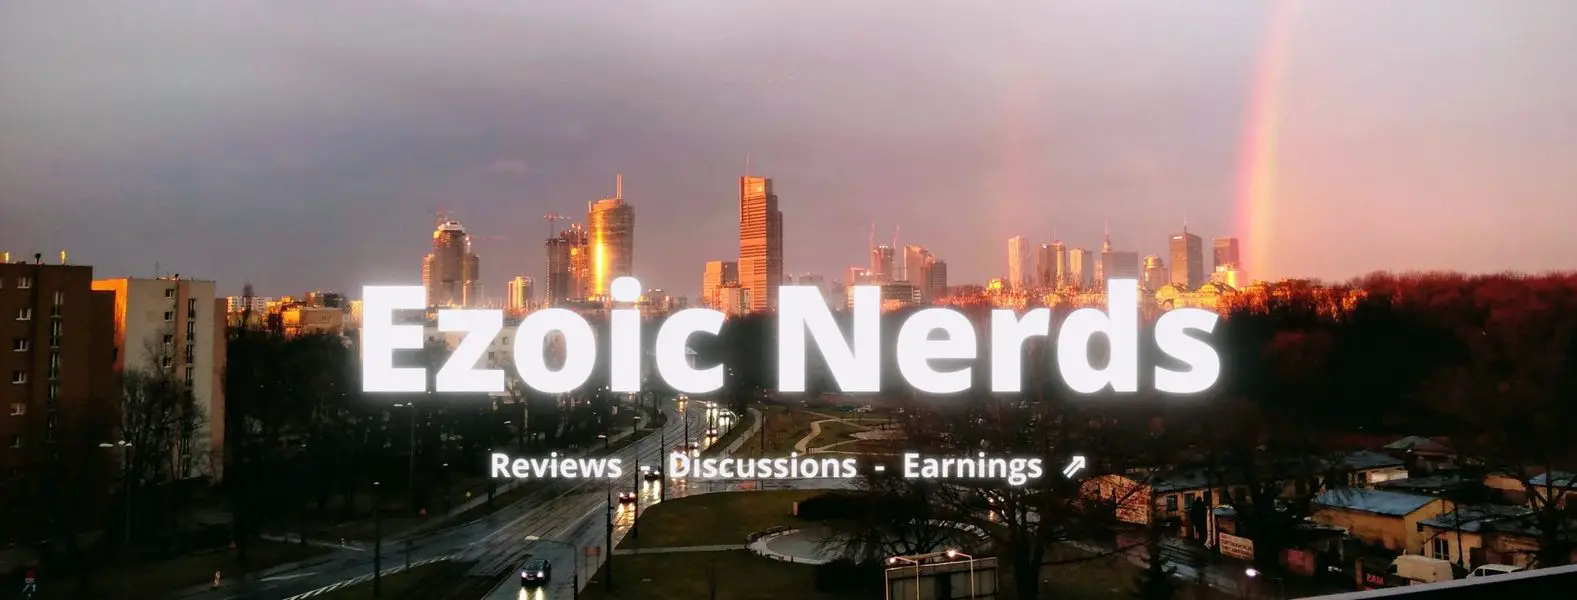 Ezoic nerds - Facebook grupa za raspravu